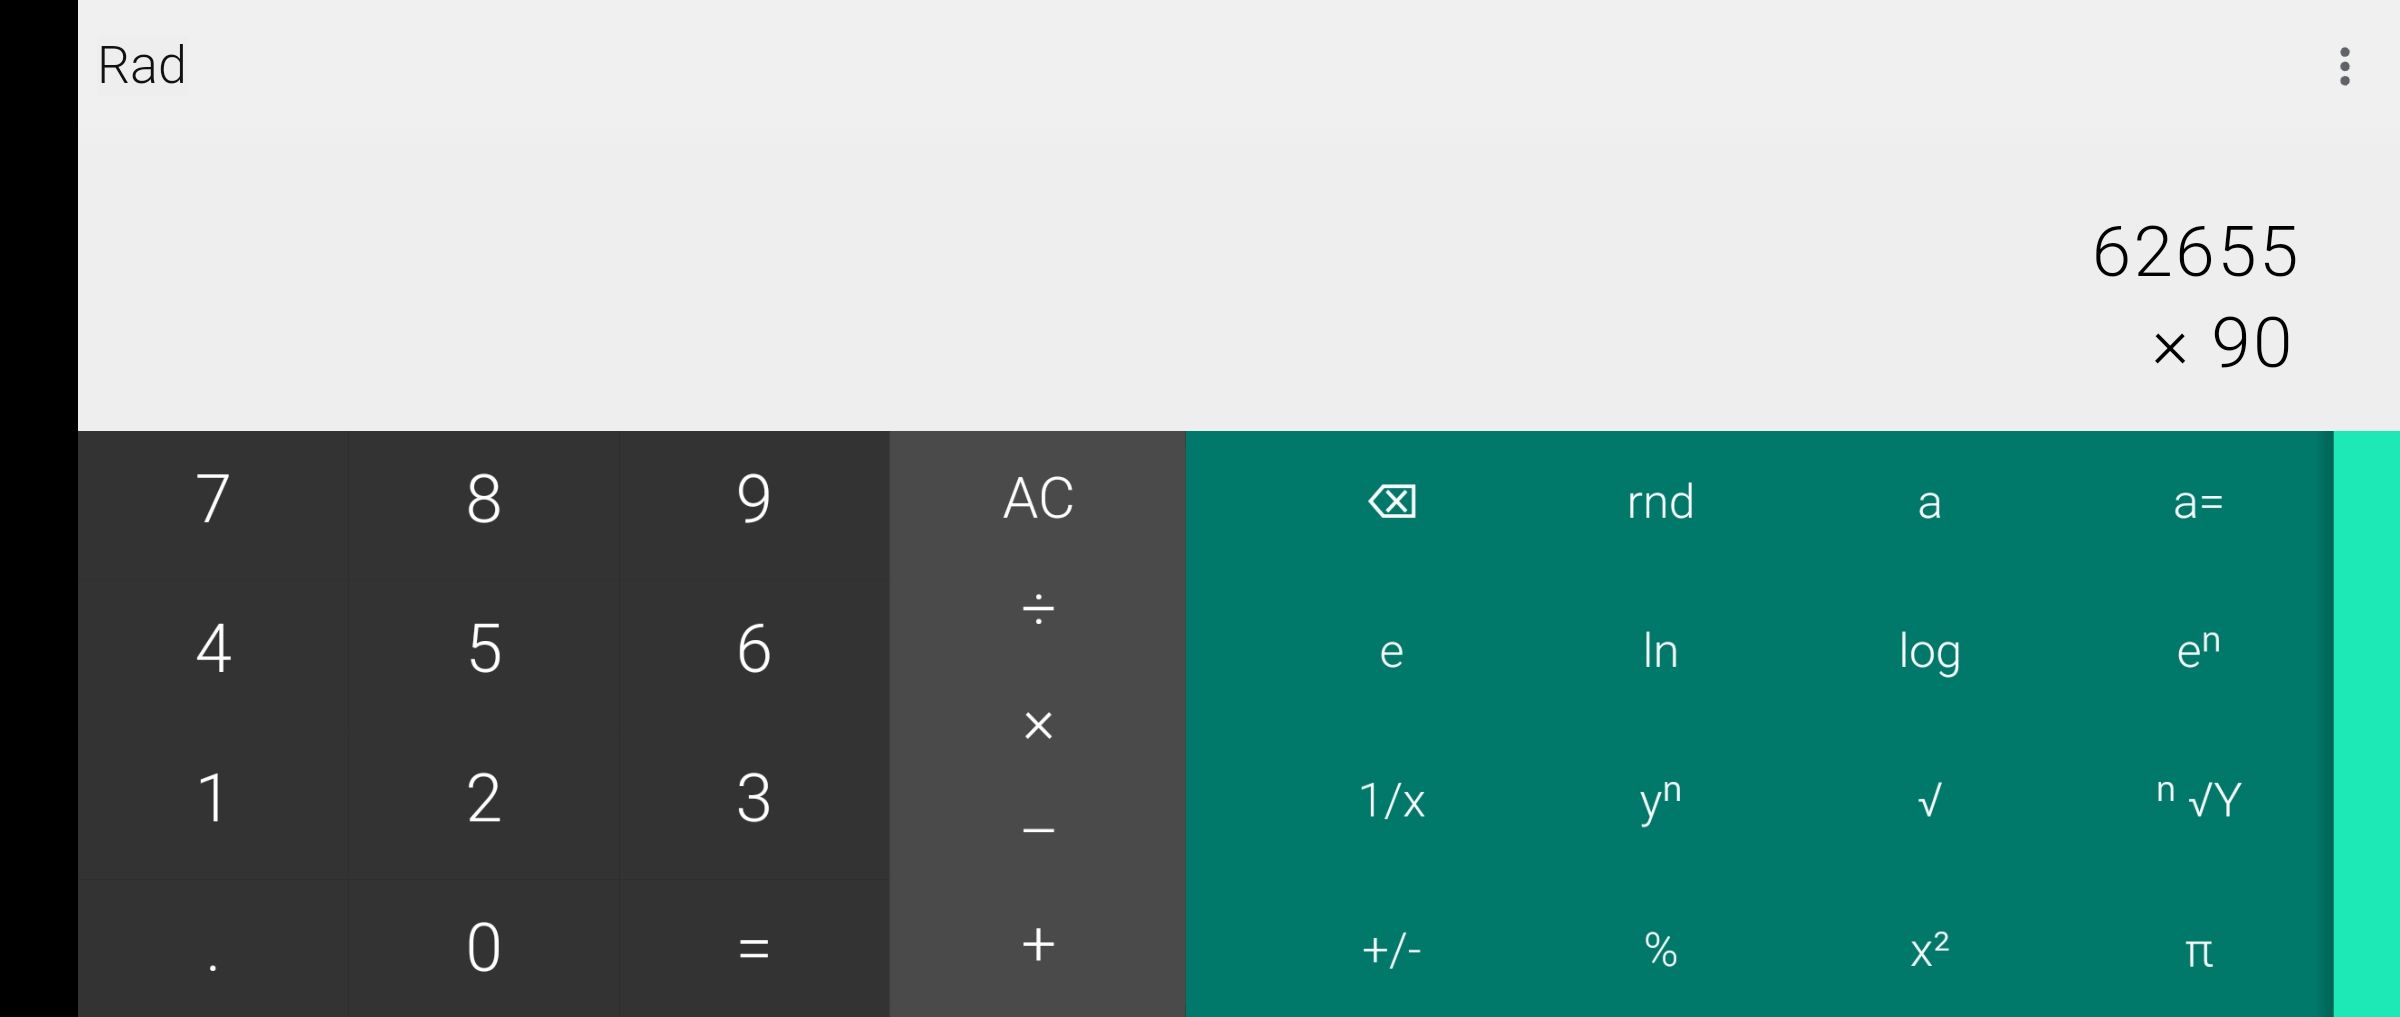 Google calculator web app on Android landscape